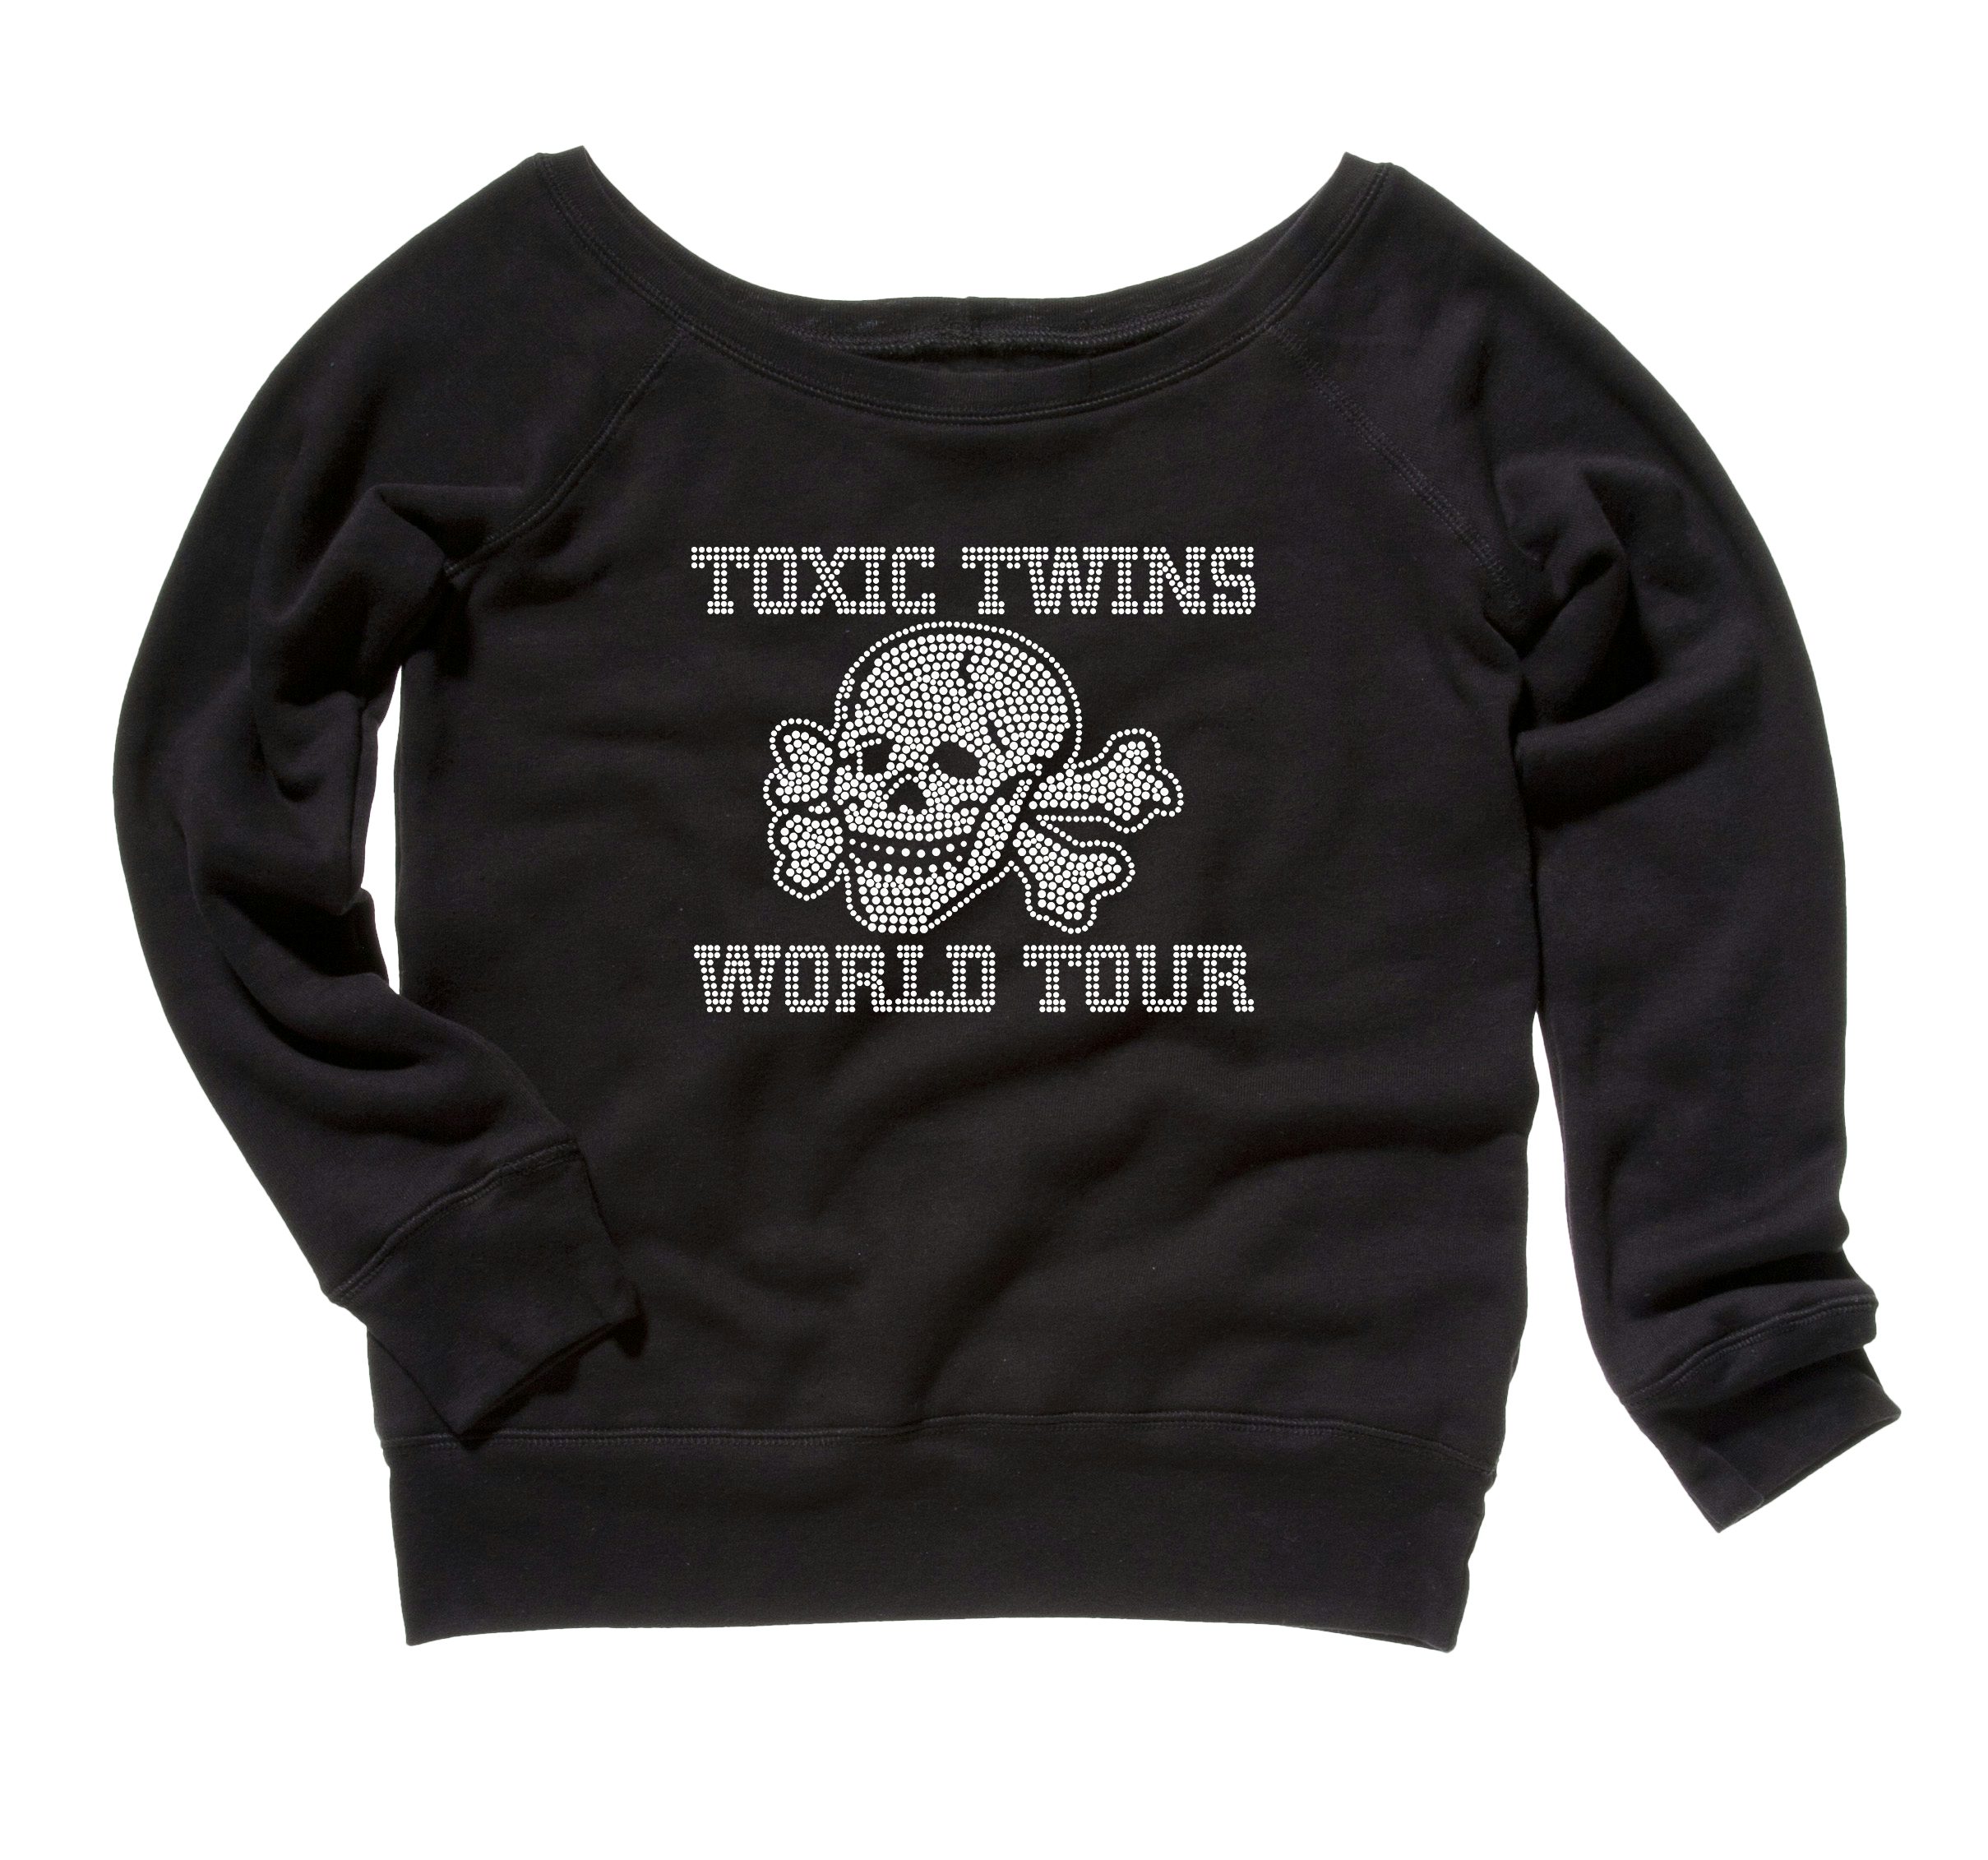 toxic twins world tour t shirt